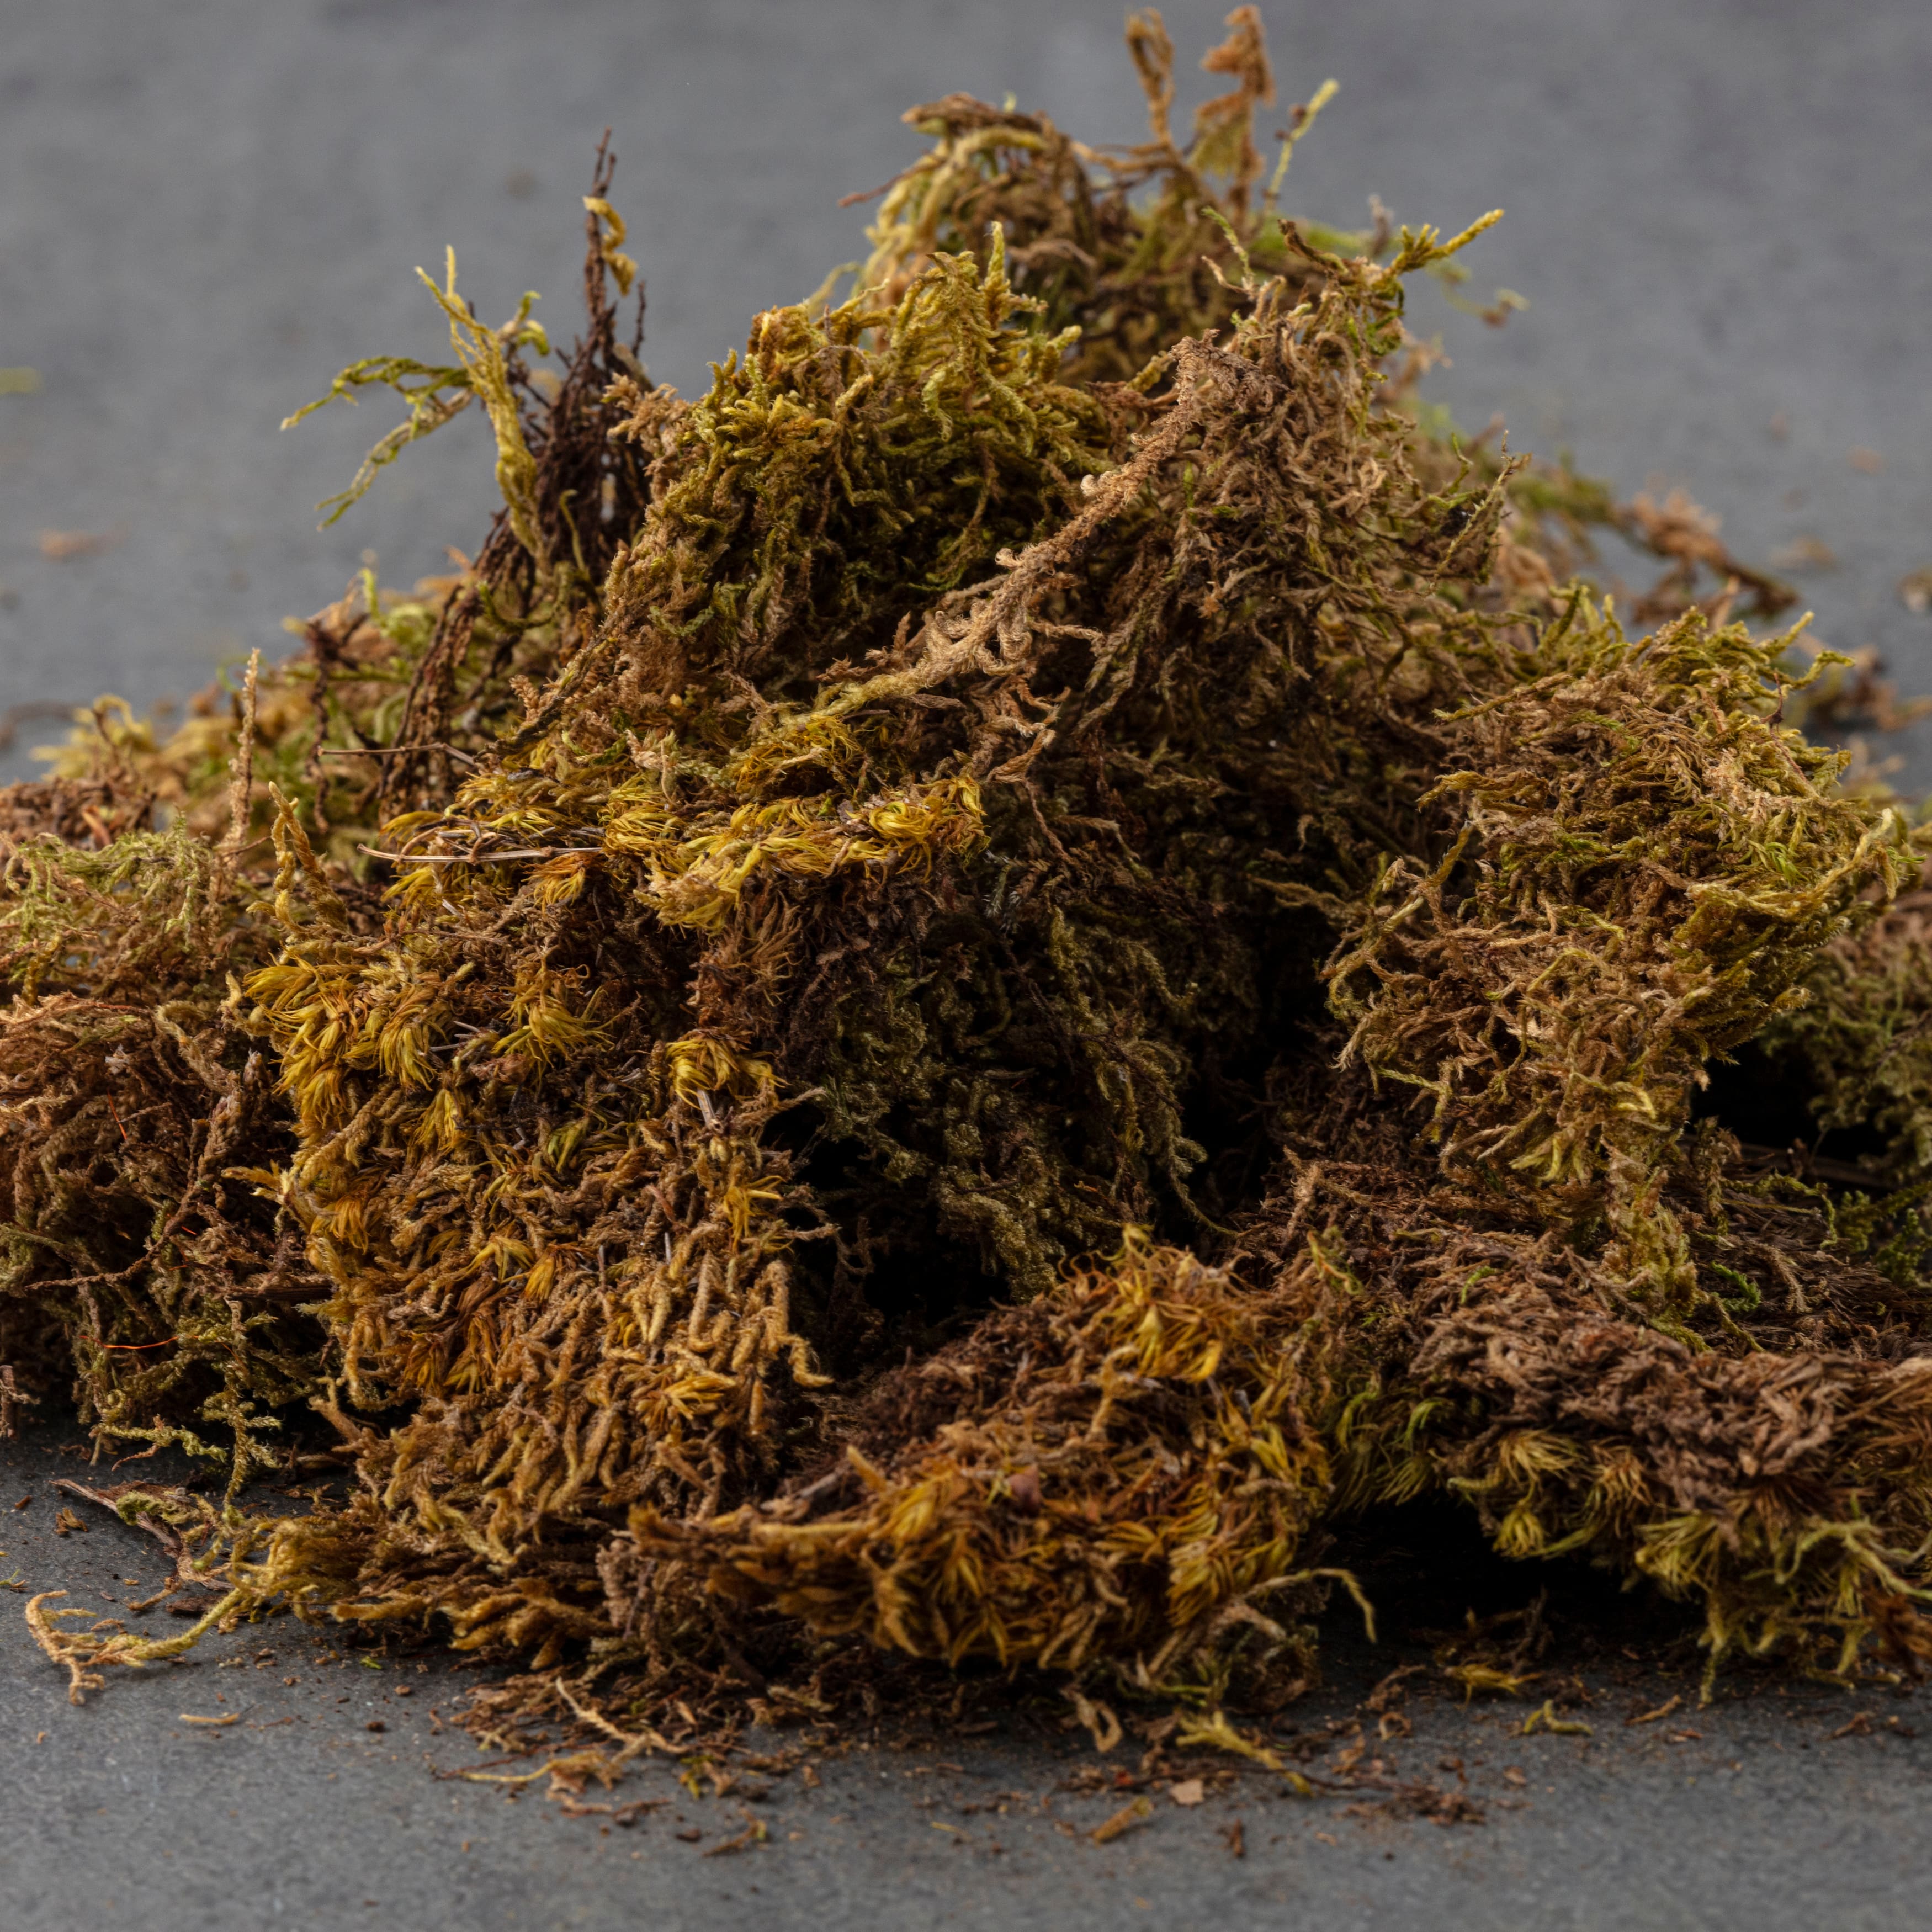 12 Pack: Decorative Moss by Ashland®